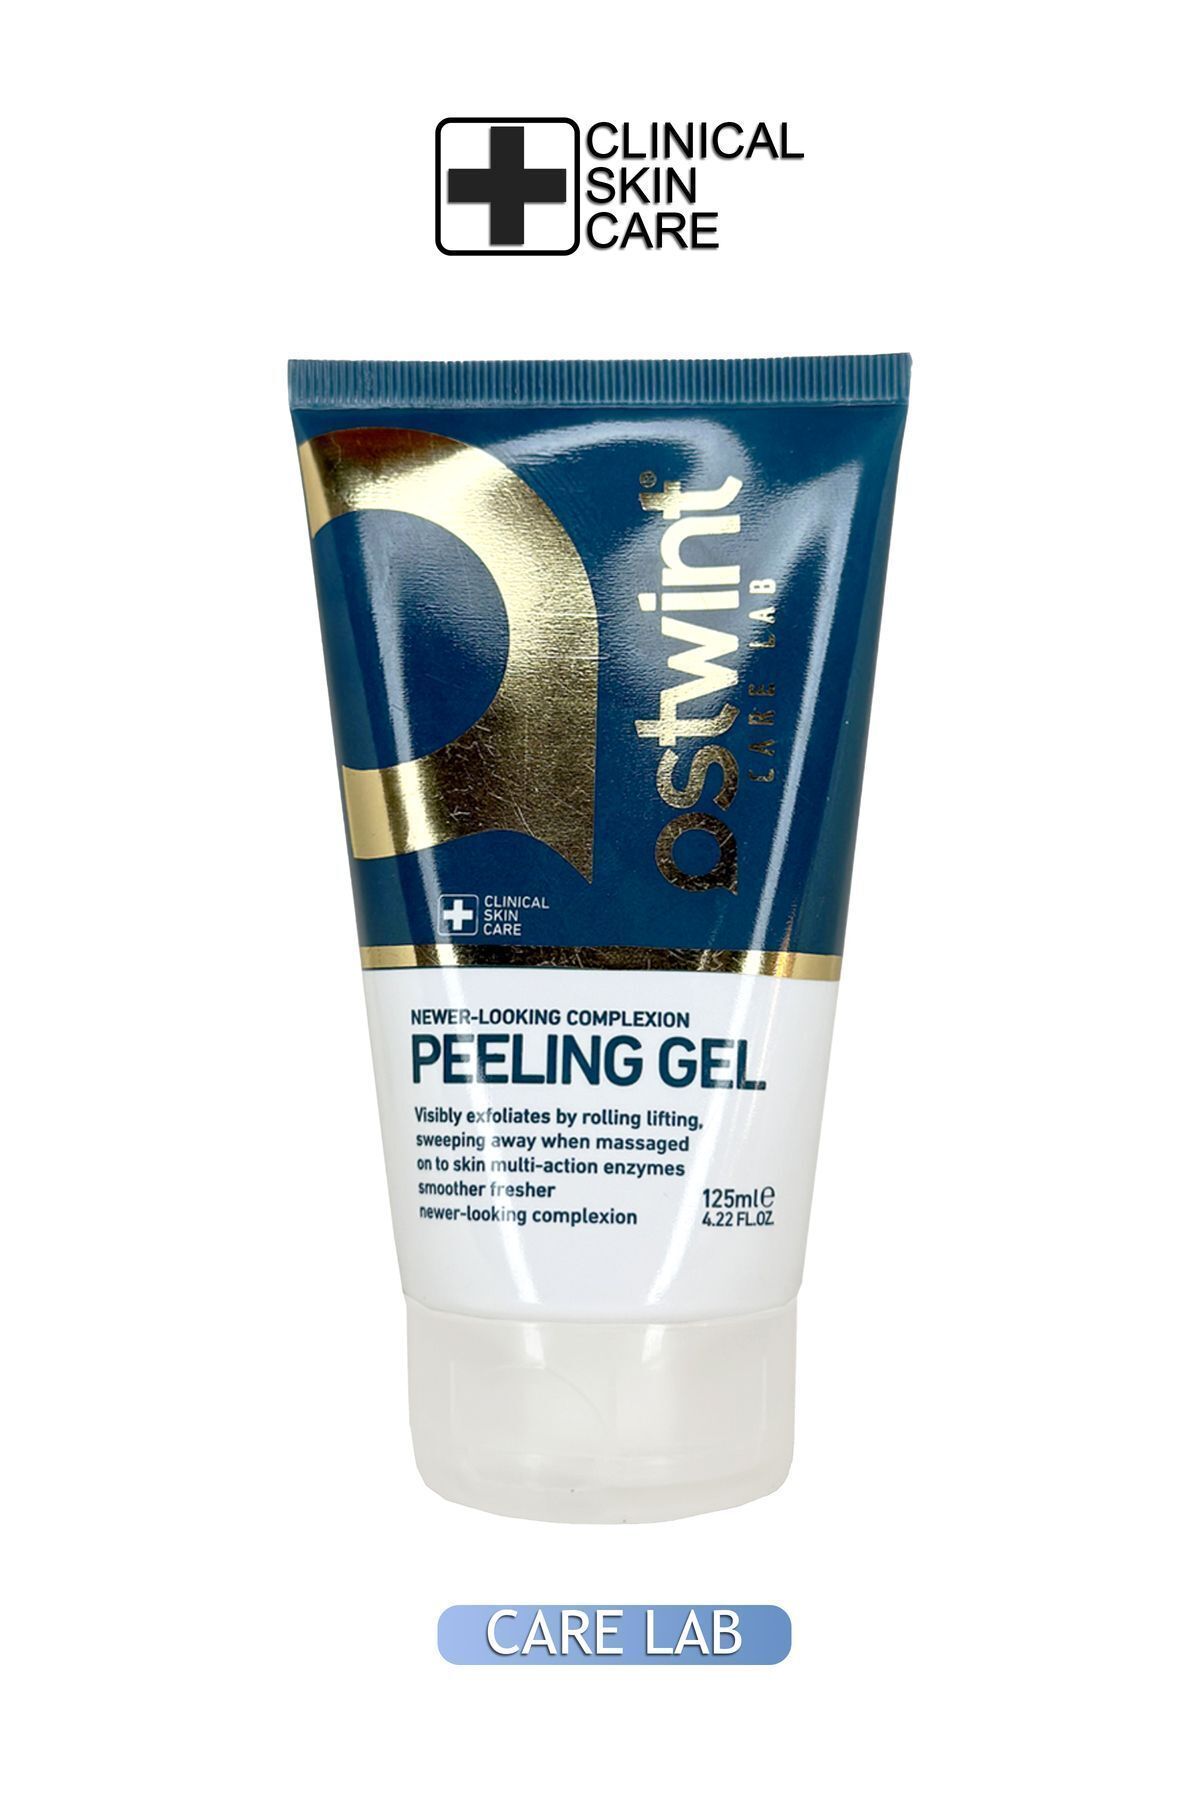 Ostwint Care Lab Clinical Skin Care Peeling Gel 125 ml